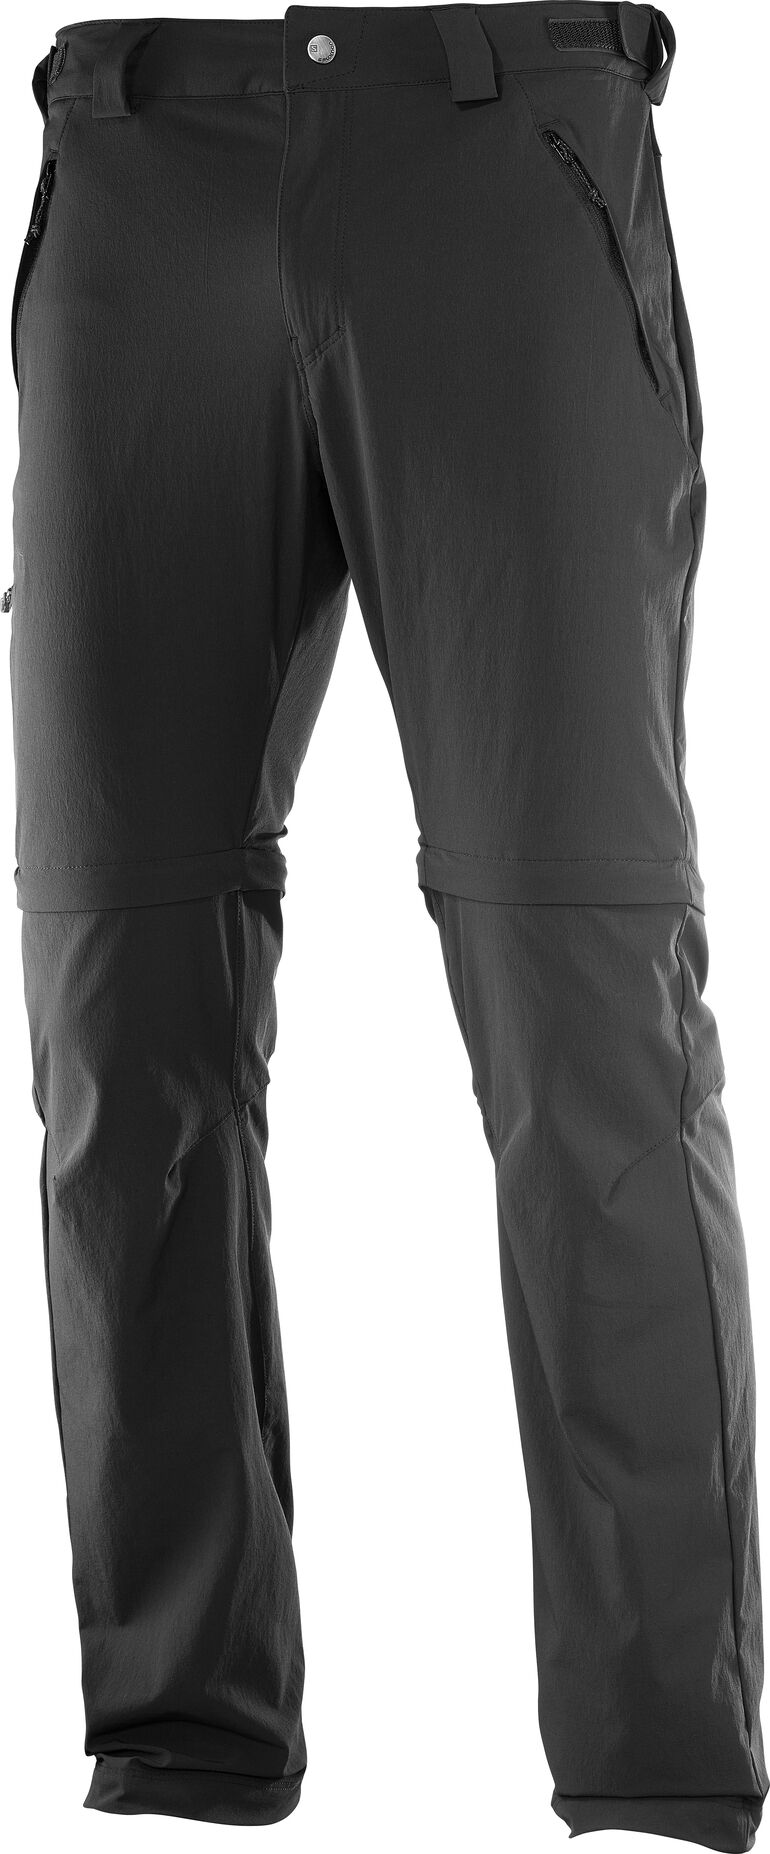 Salomon - Wayfarer Zip Pant M - Trekking trousers - Men's